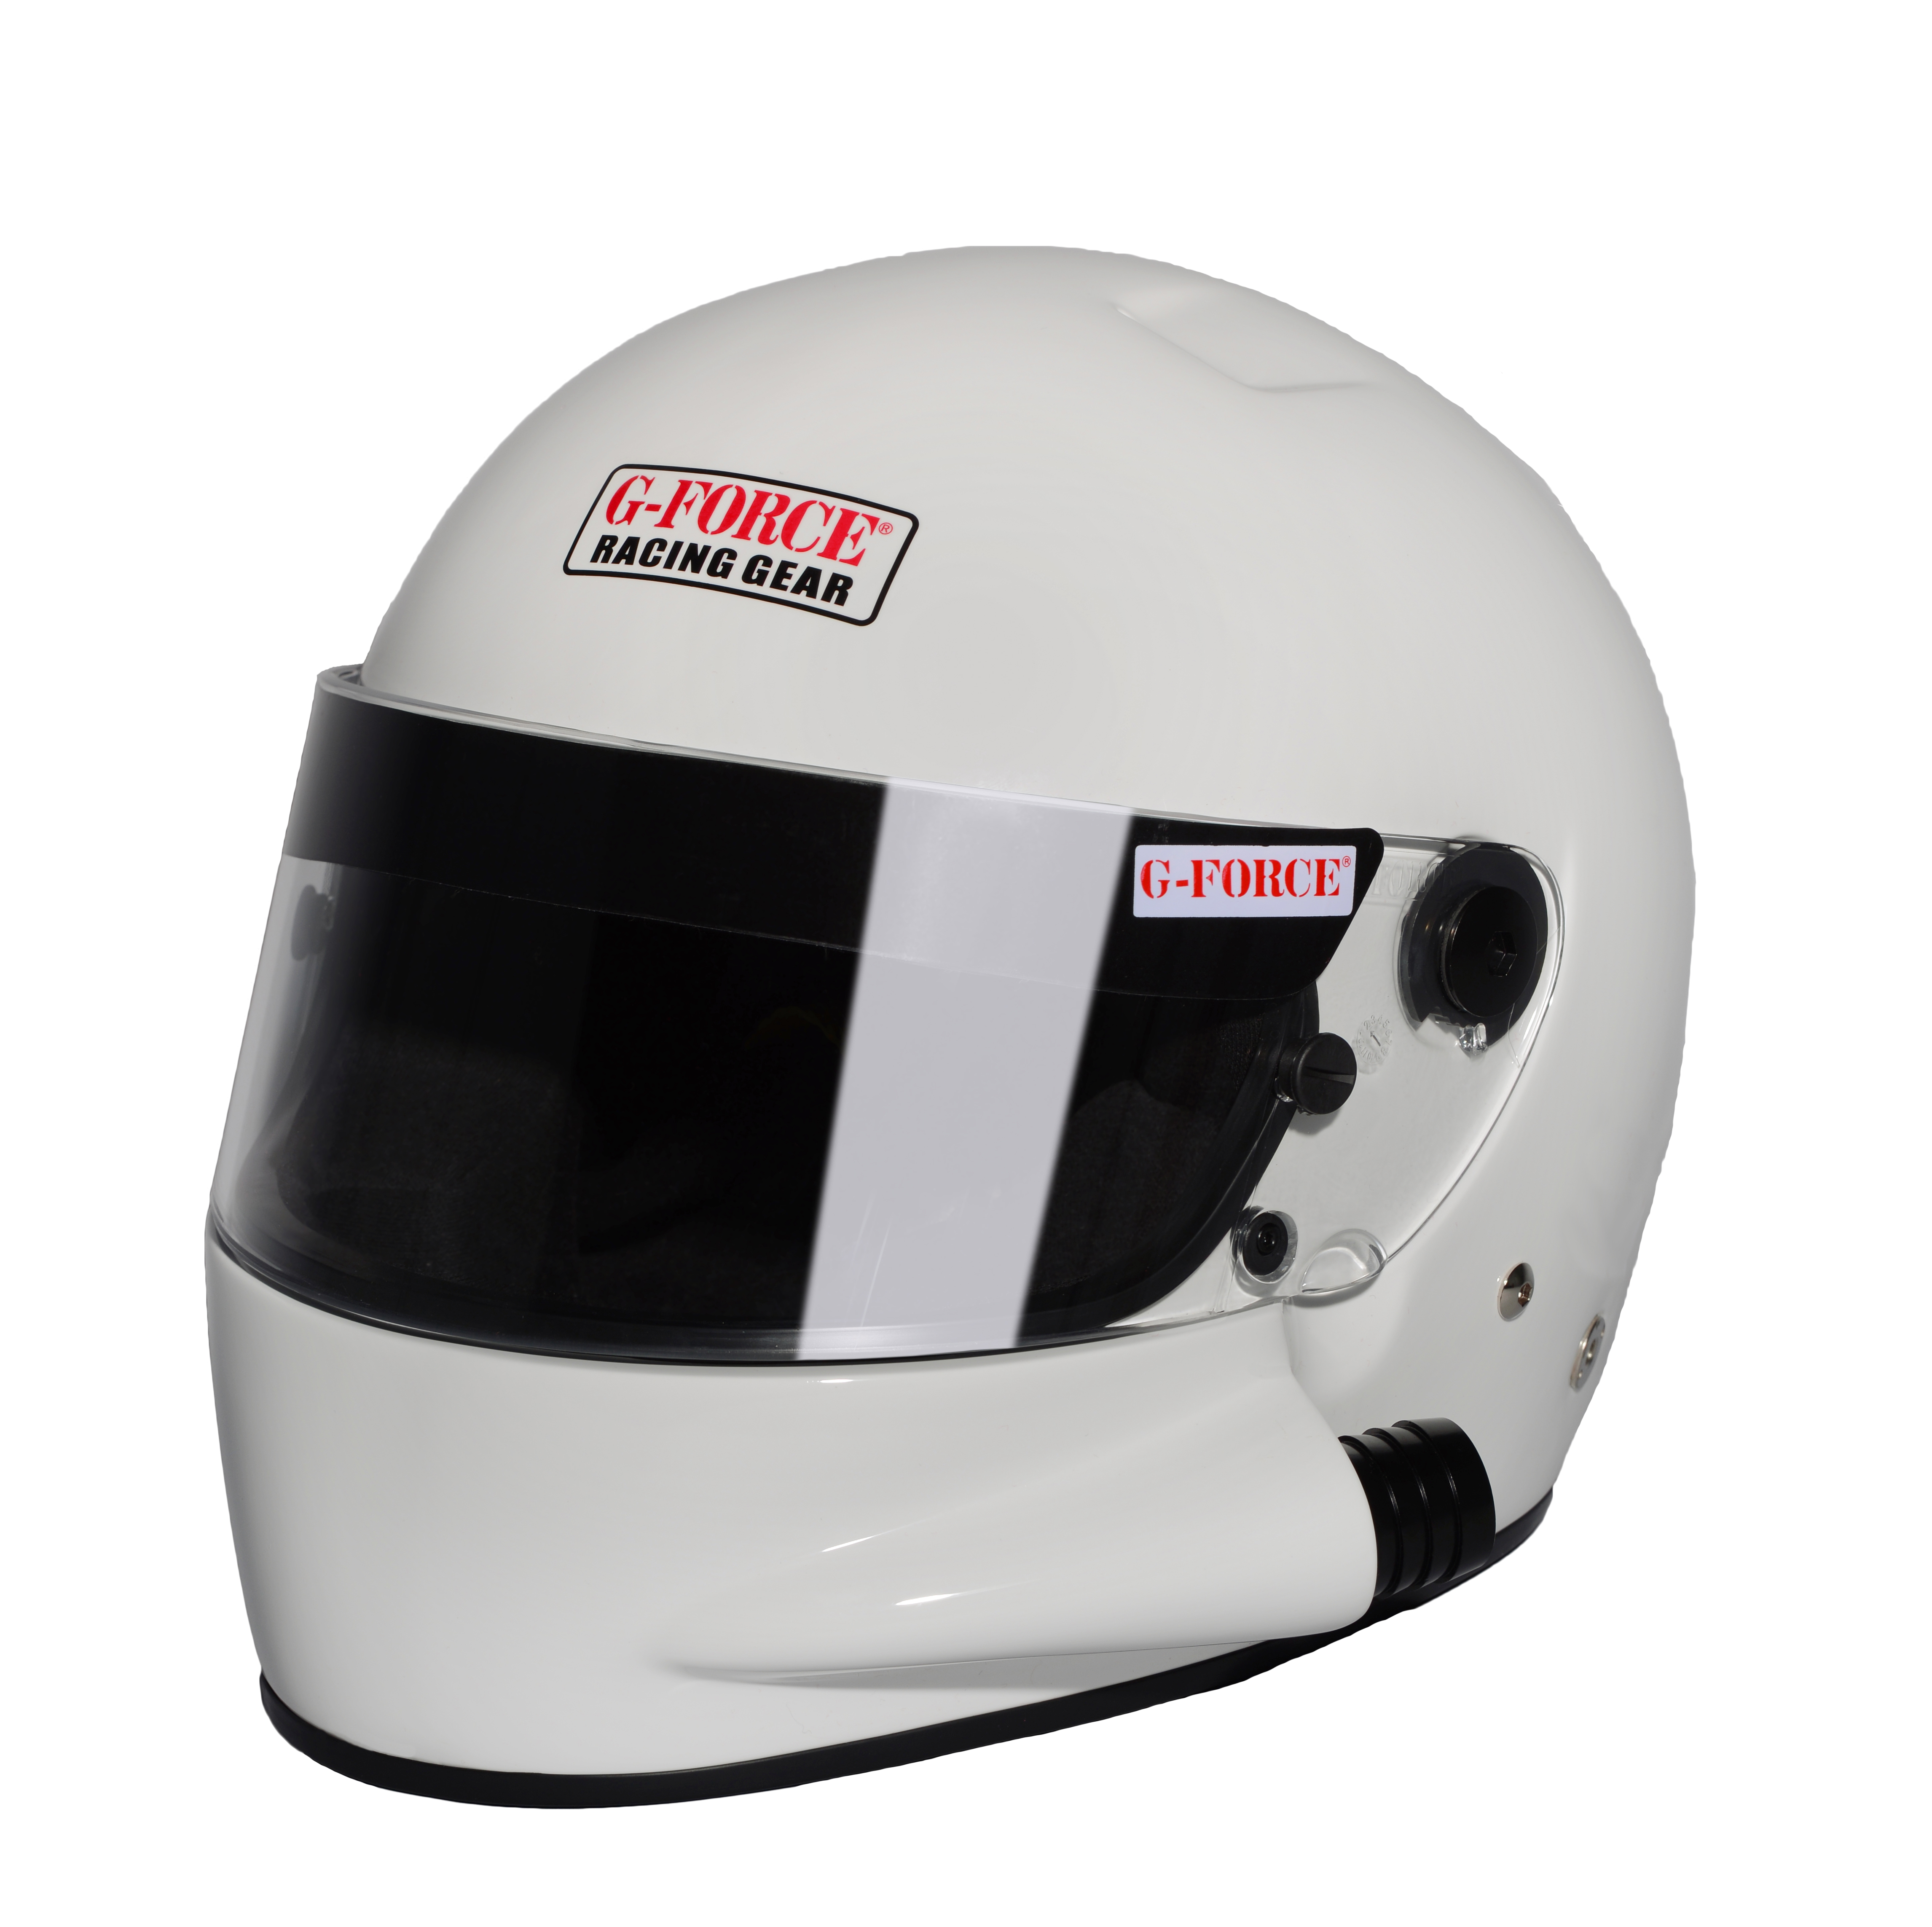 G-Force Racing Gear Helmet, SIDE DRAFT SA2010 FULL FACE LARGE WHITE